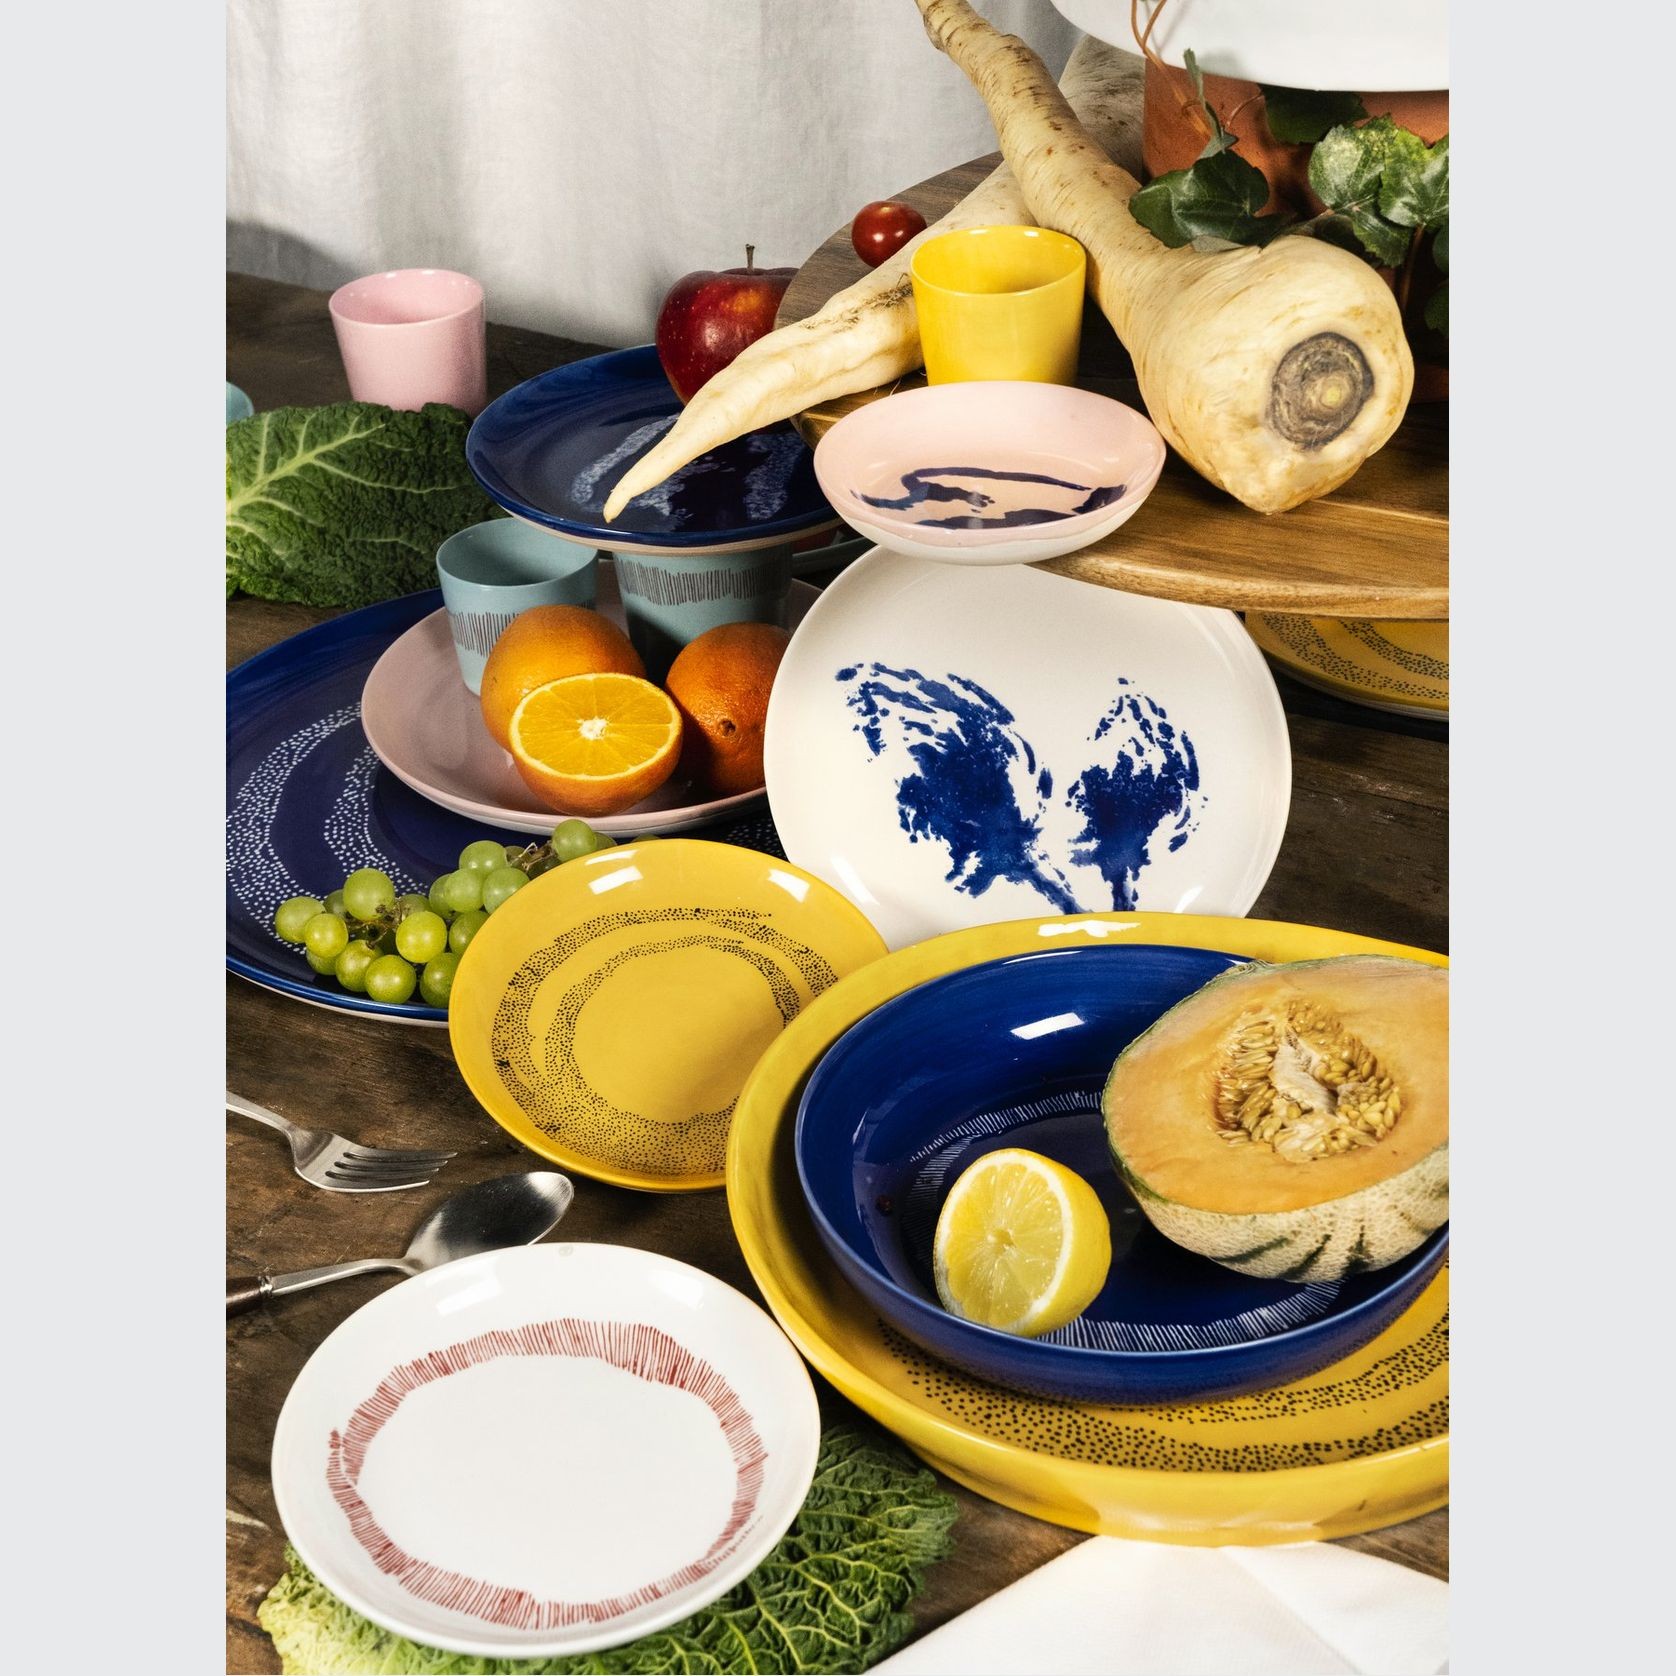 Ottolenghi White Artichoke Blue Plate - Set of 2 gallery detail image